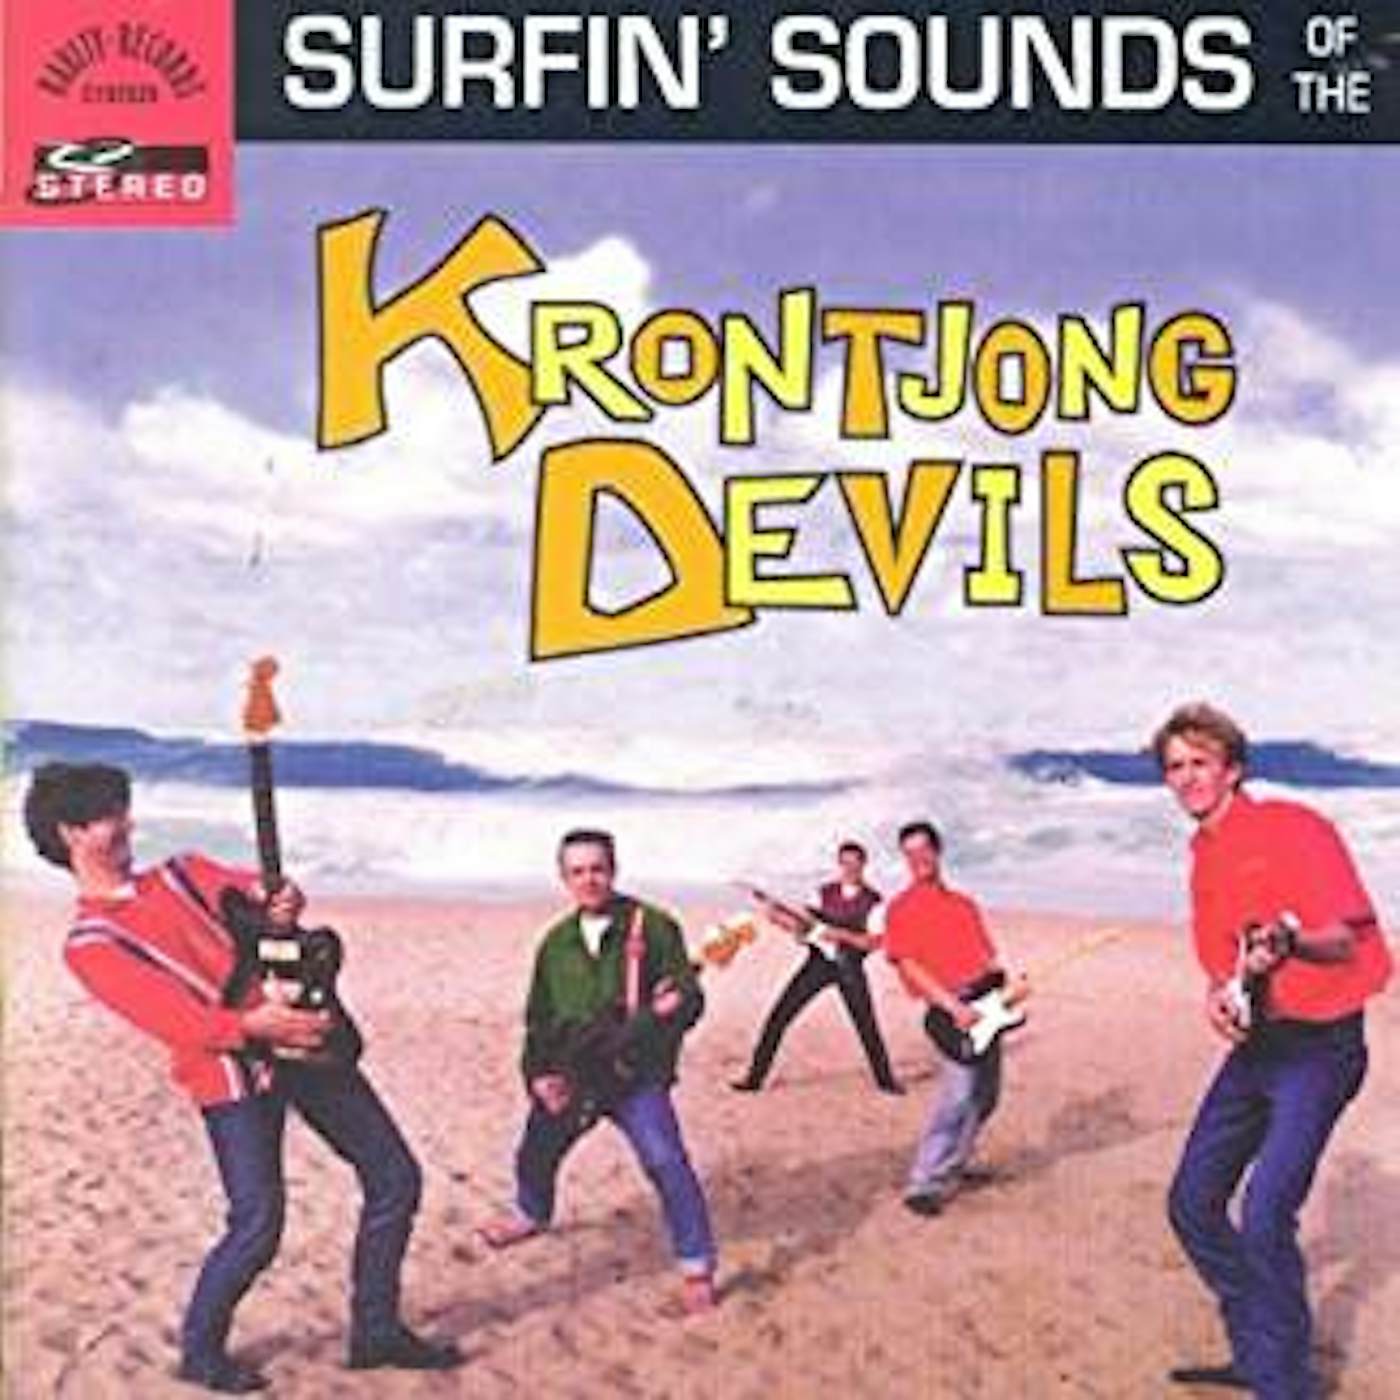 Krontjong Devils SURFIN' SOUNDS CD